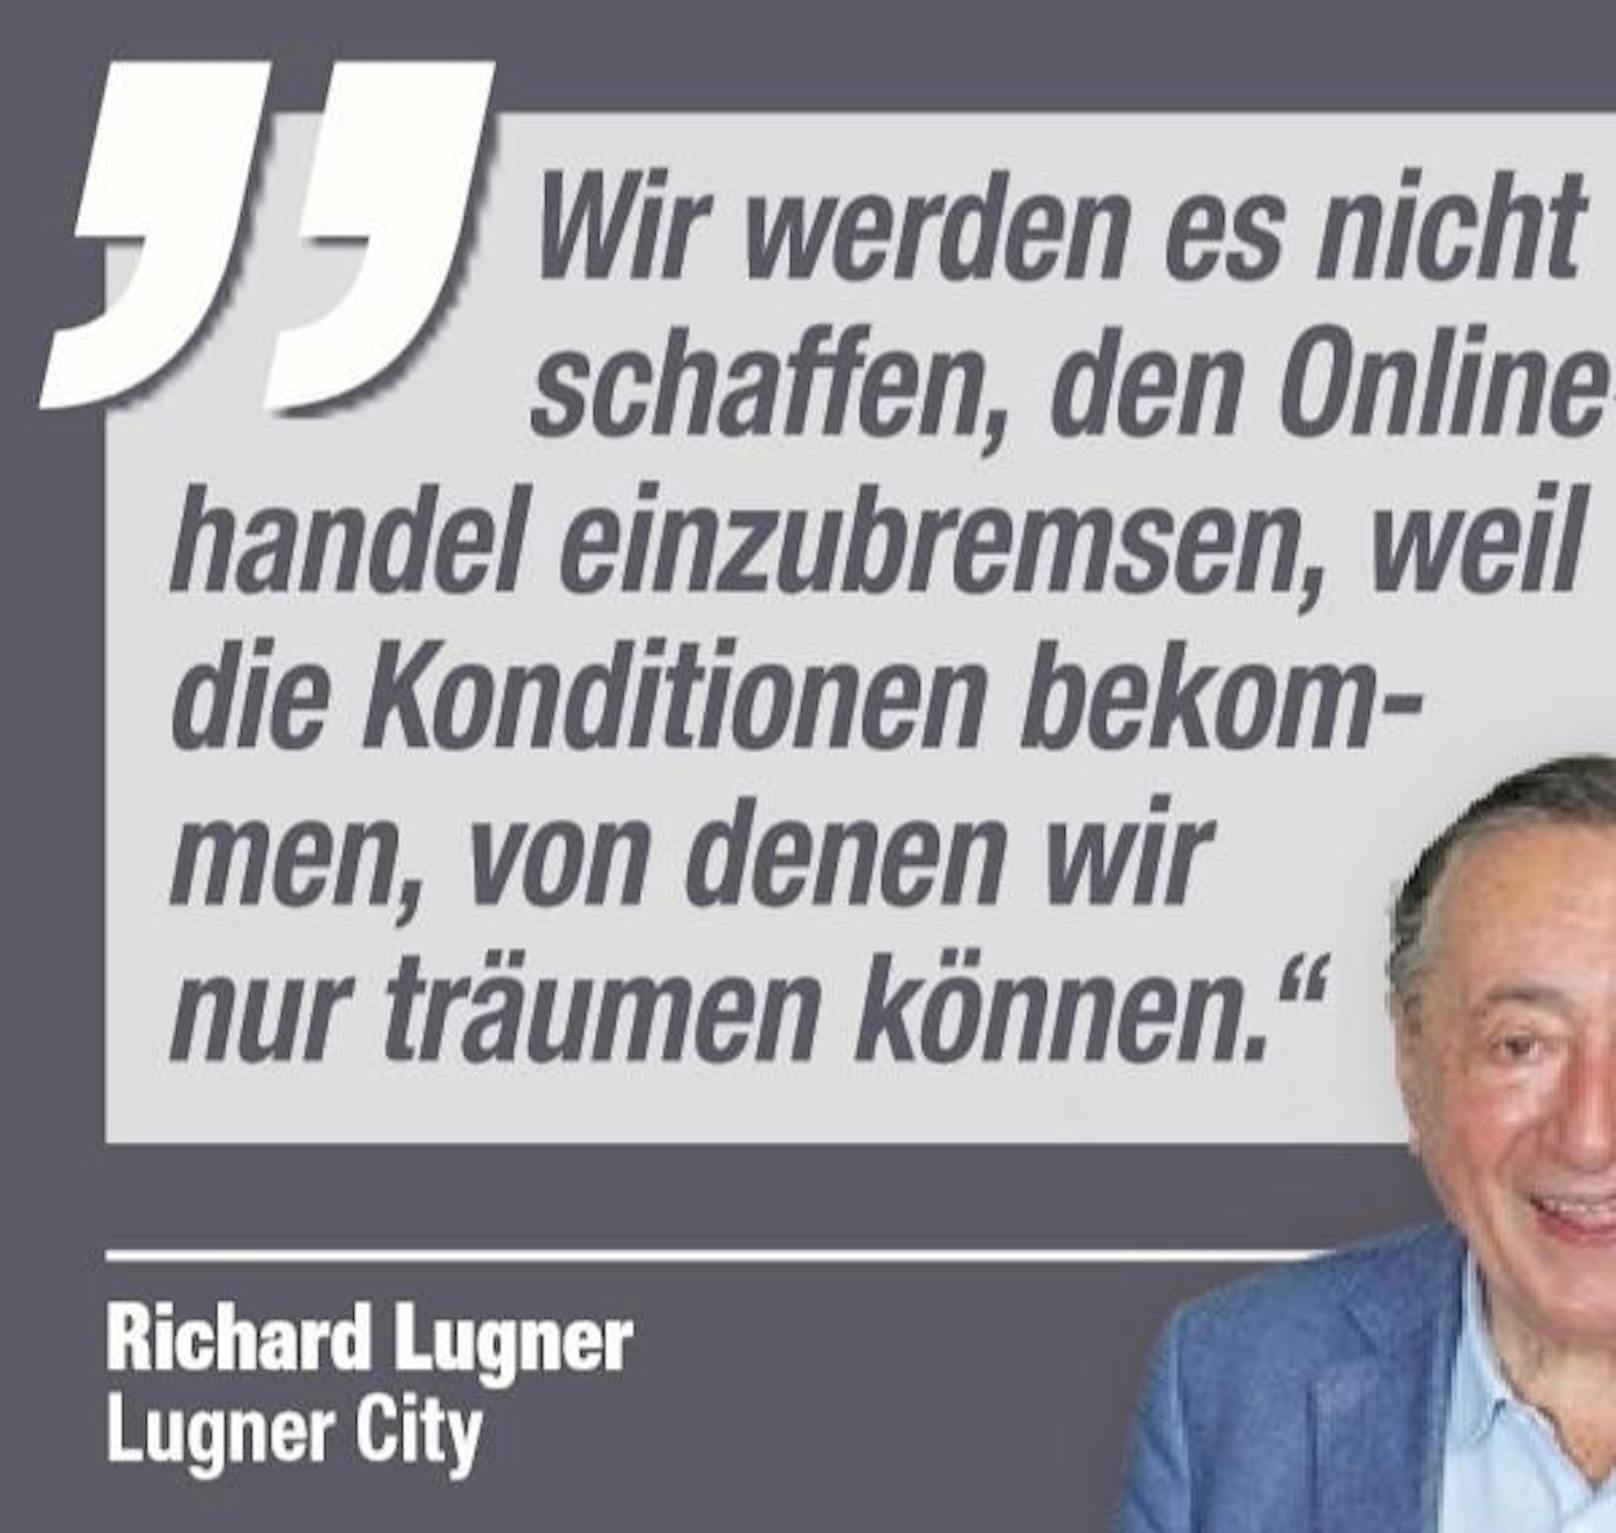 Richard Lugner, Lugner City